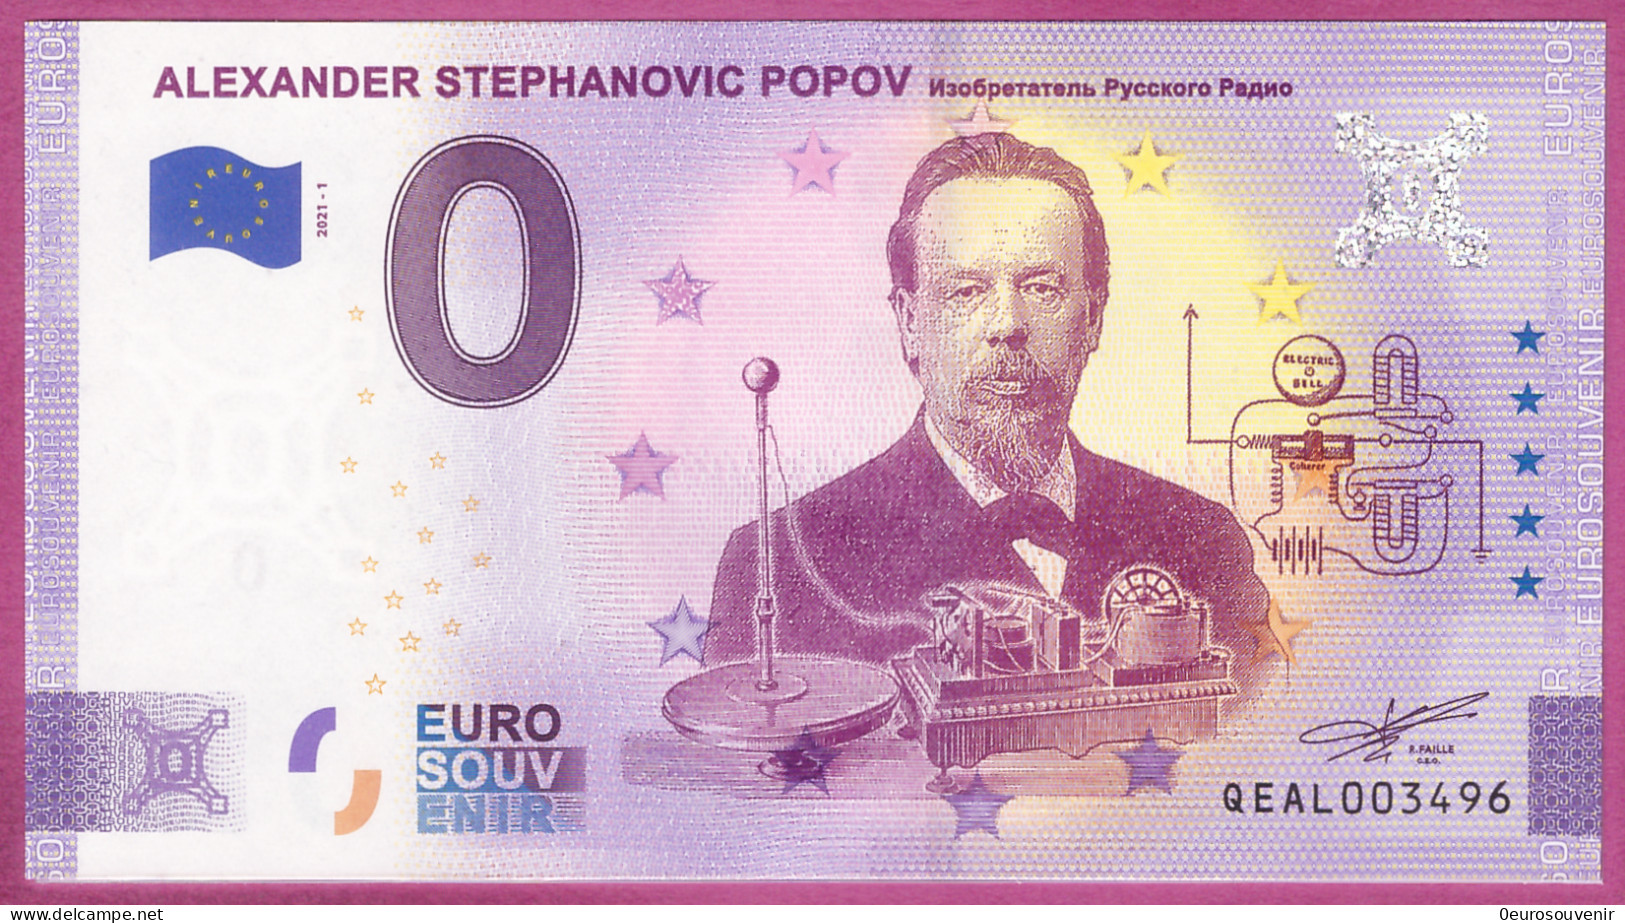 0-Euro QEAL 2021-1 ALEXANDER STEPHANOVIC POPOV Изобретатель Руccкого Радио - Private Proofs / Unofficial